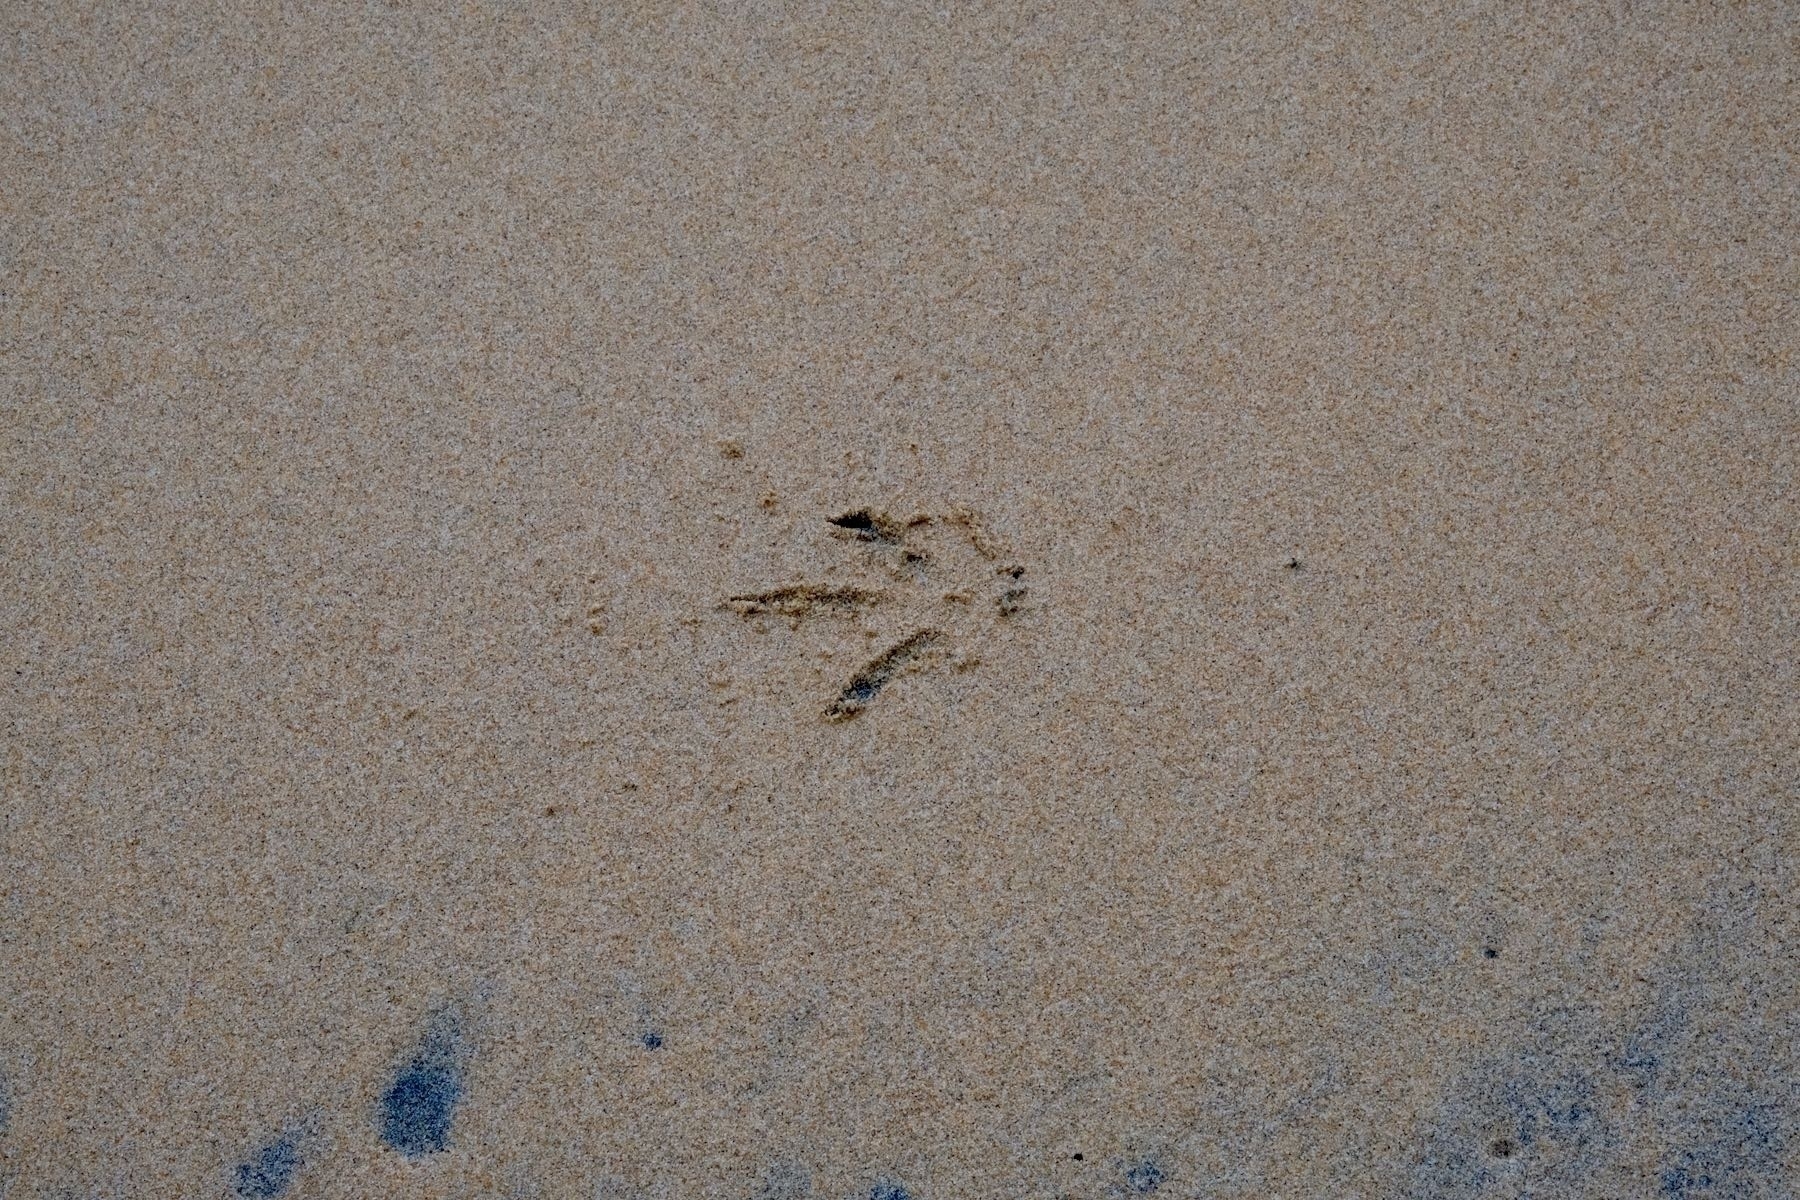 Kiwi footprint in sand. 